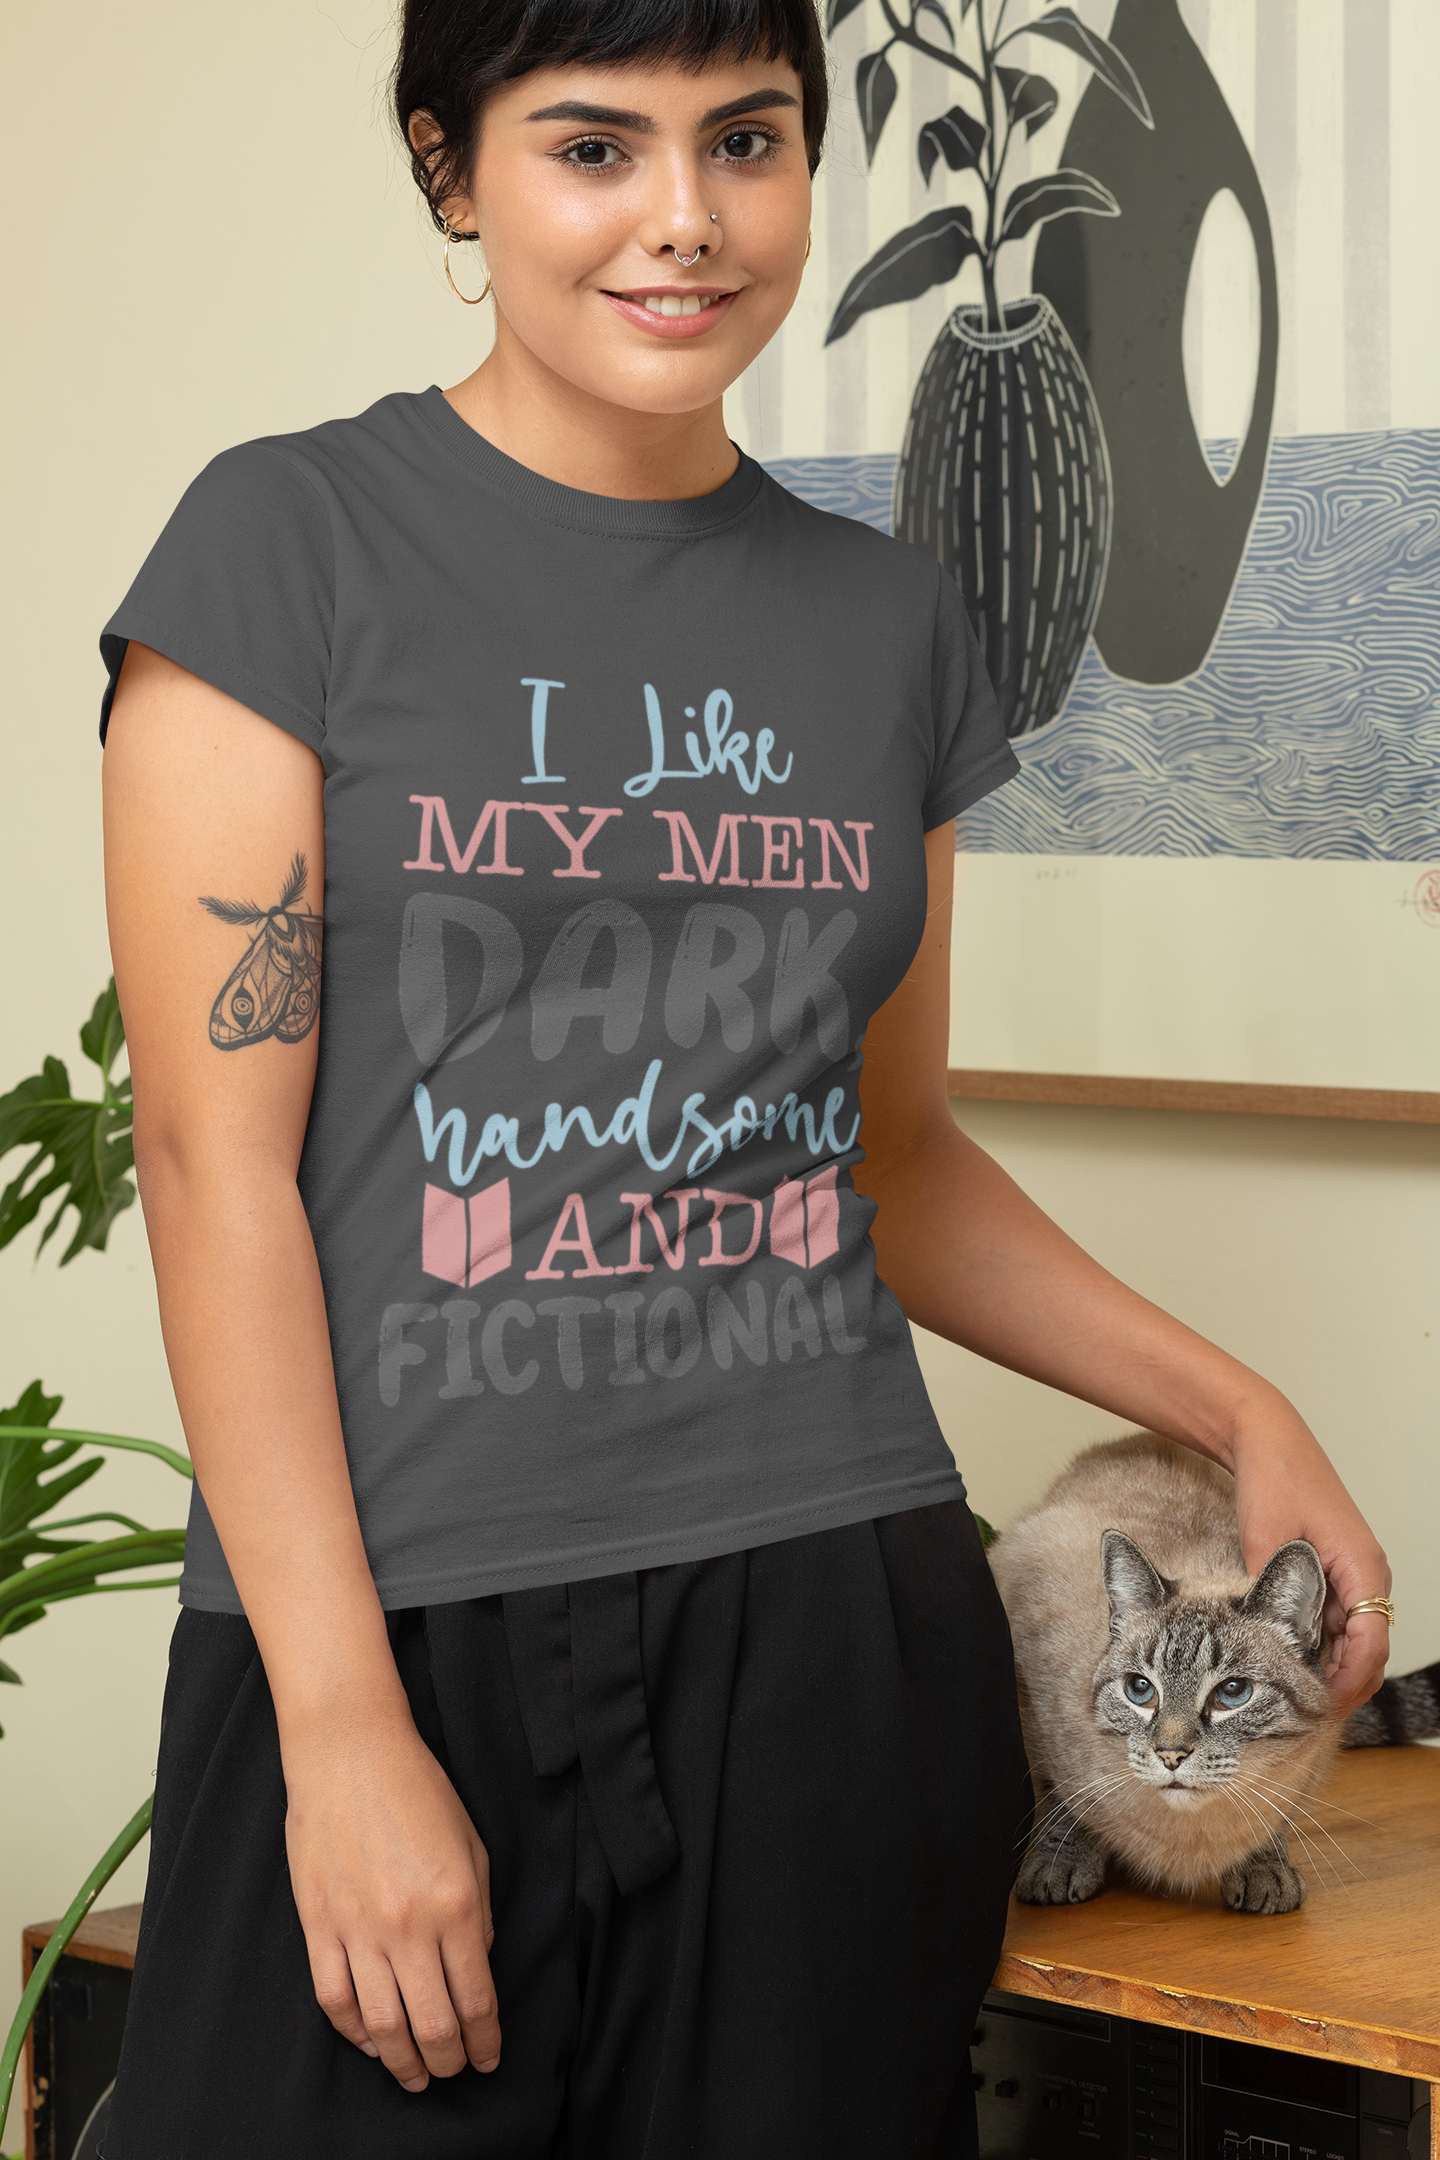 I like my men dark and fictional - Bookish T-shirt